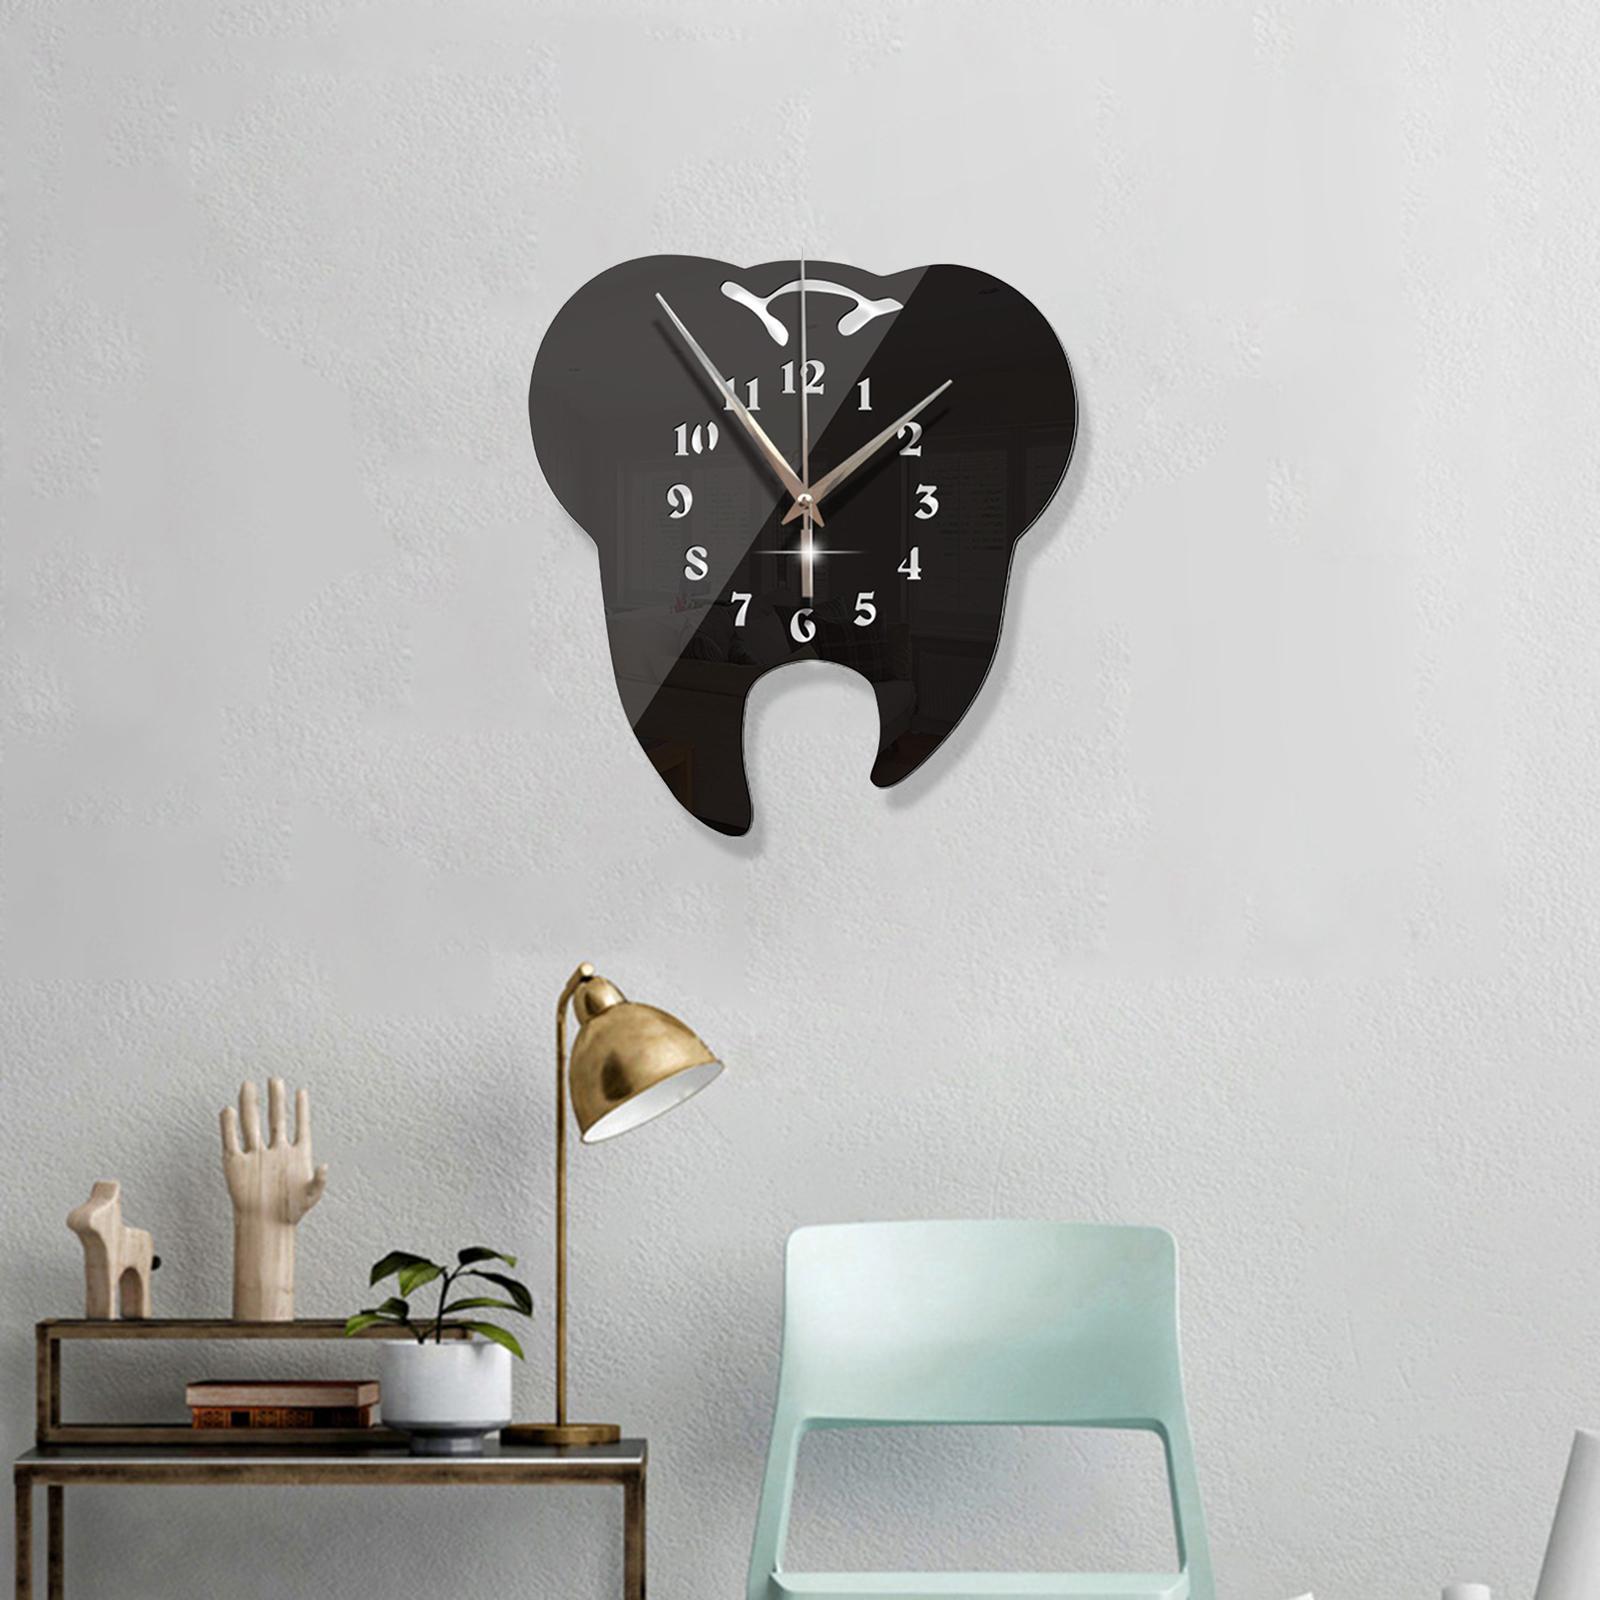 Modern Acrylic Wall Clocks Silent Decorative for